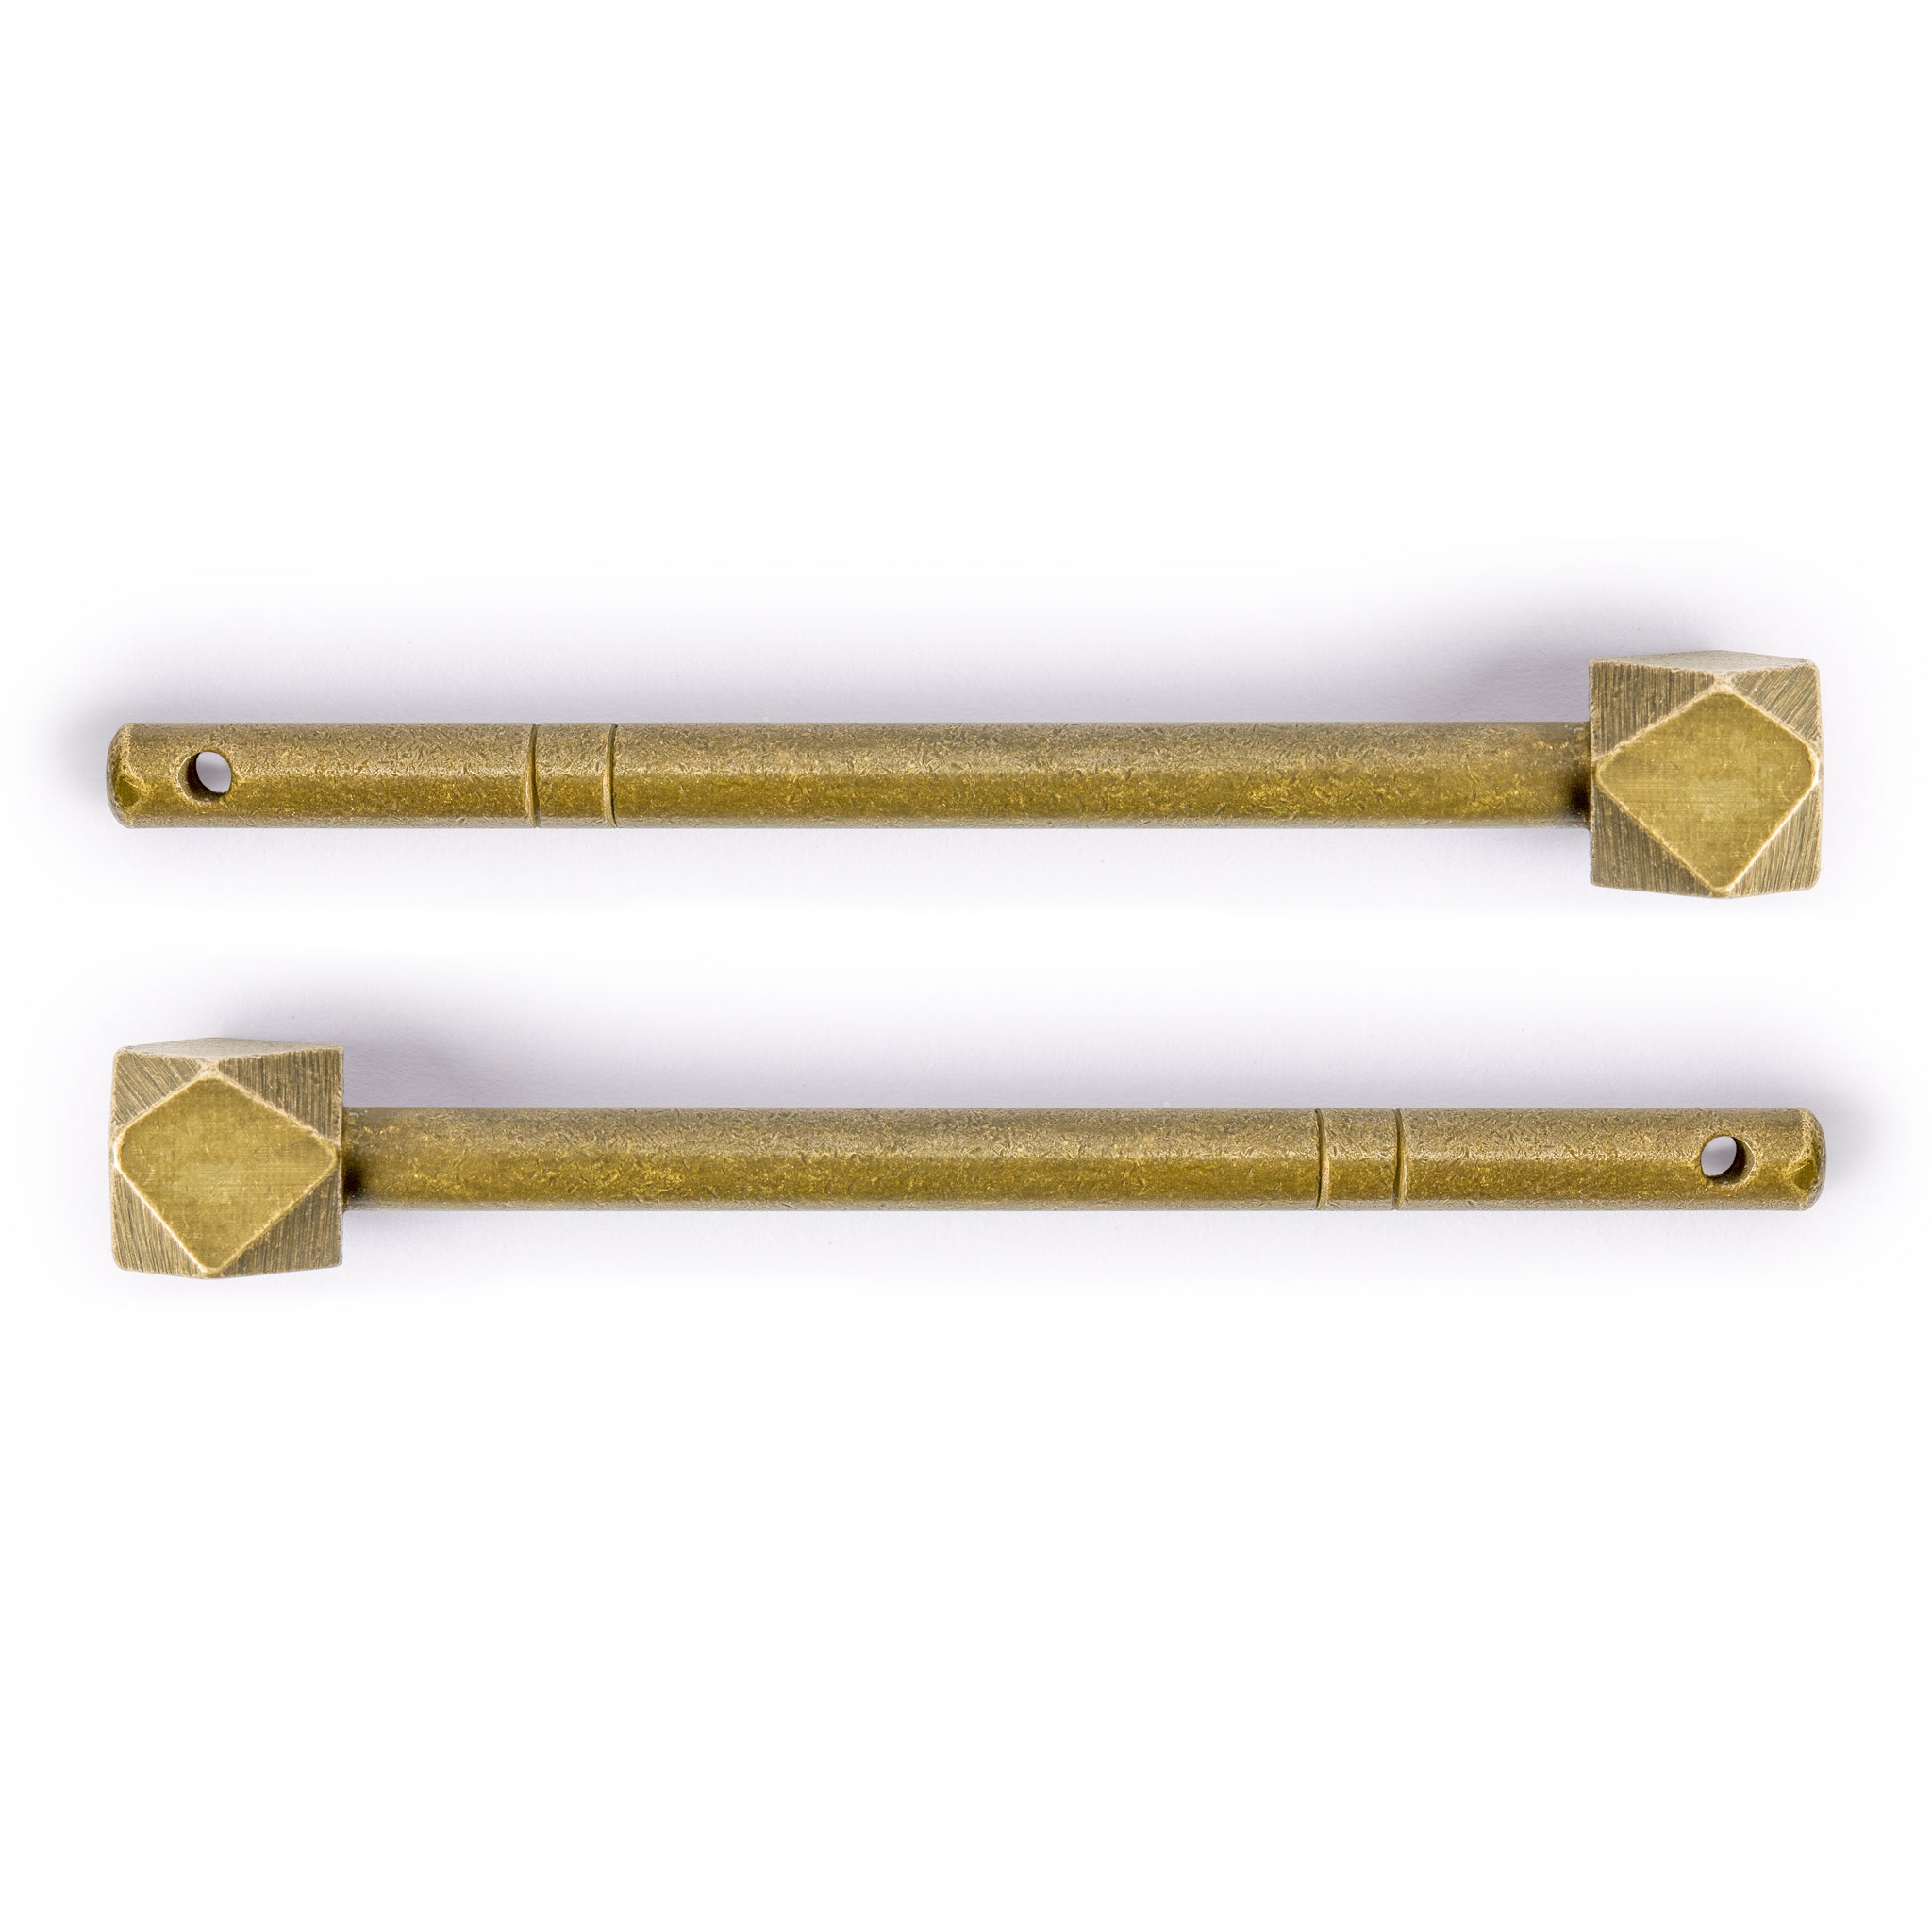 14 Sided Key Pins 2-7/8" - Set of 2-Chinese Brass Hardware